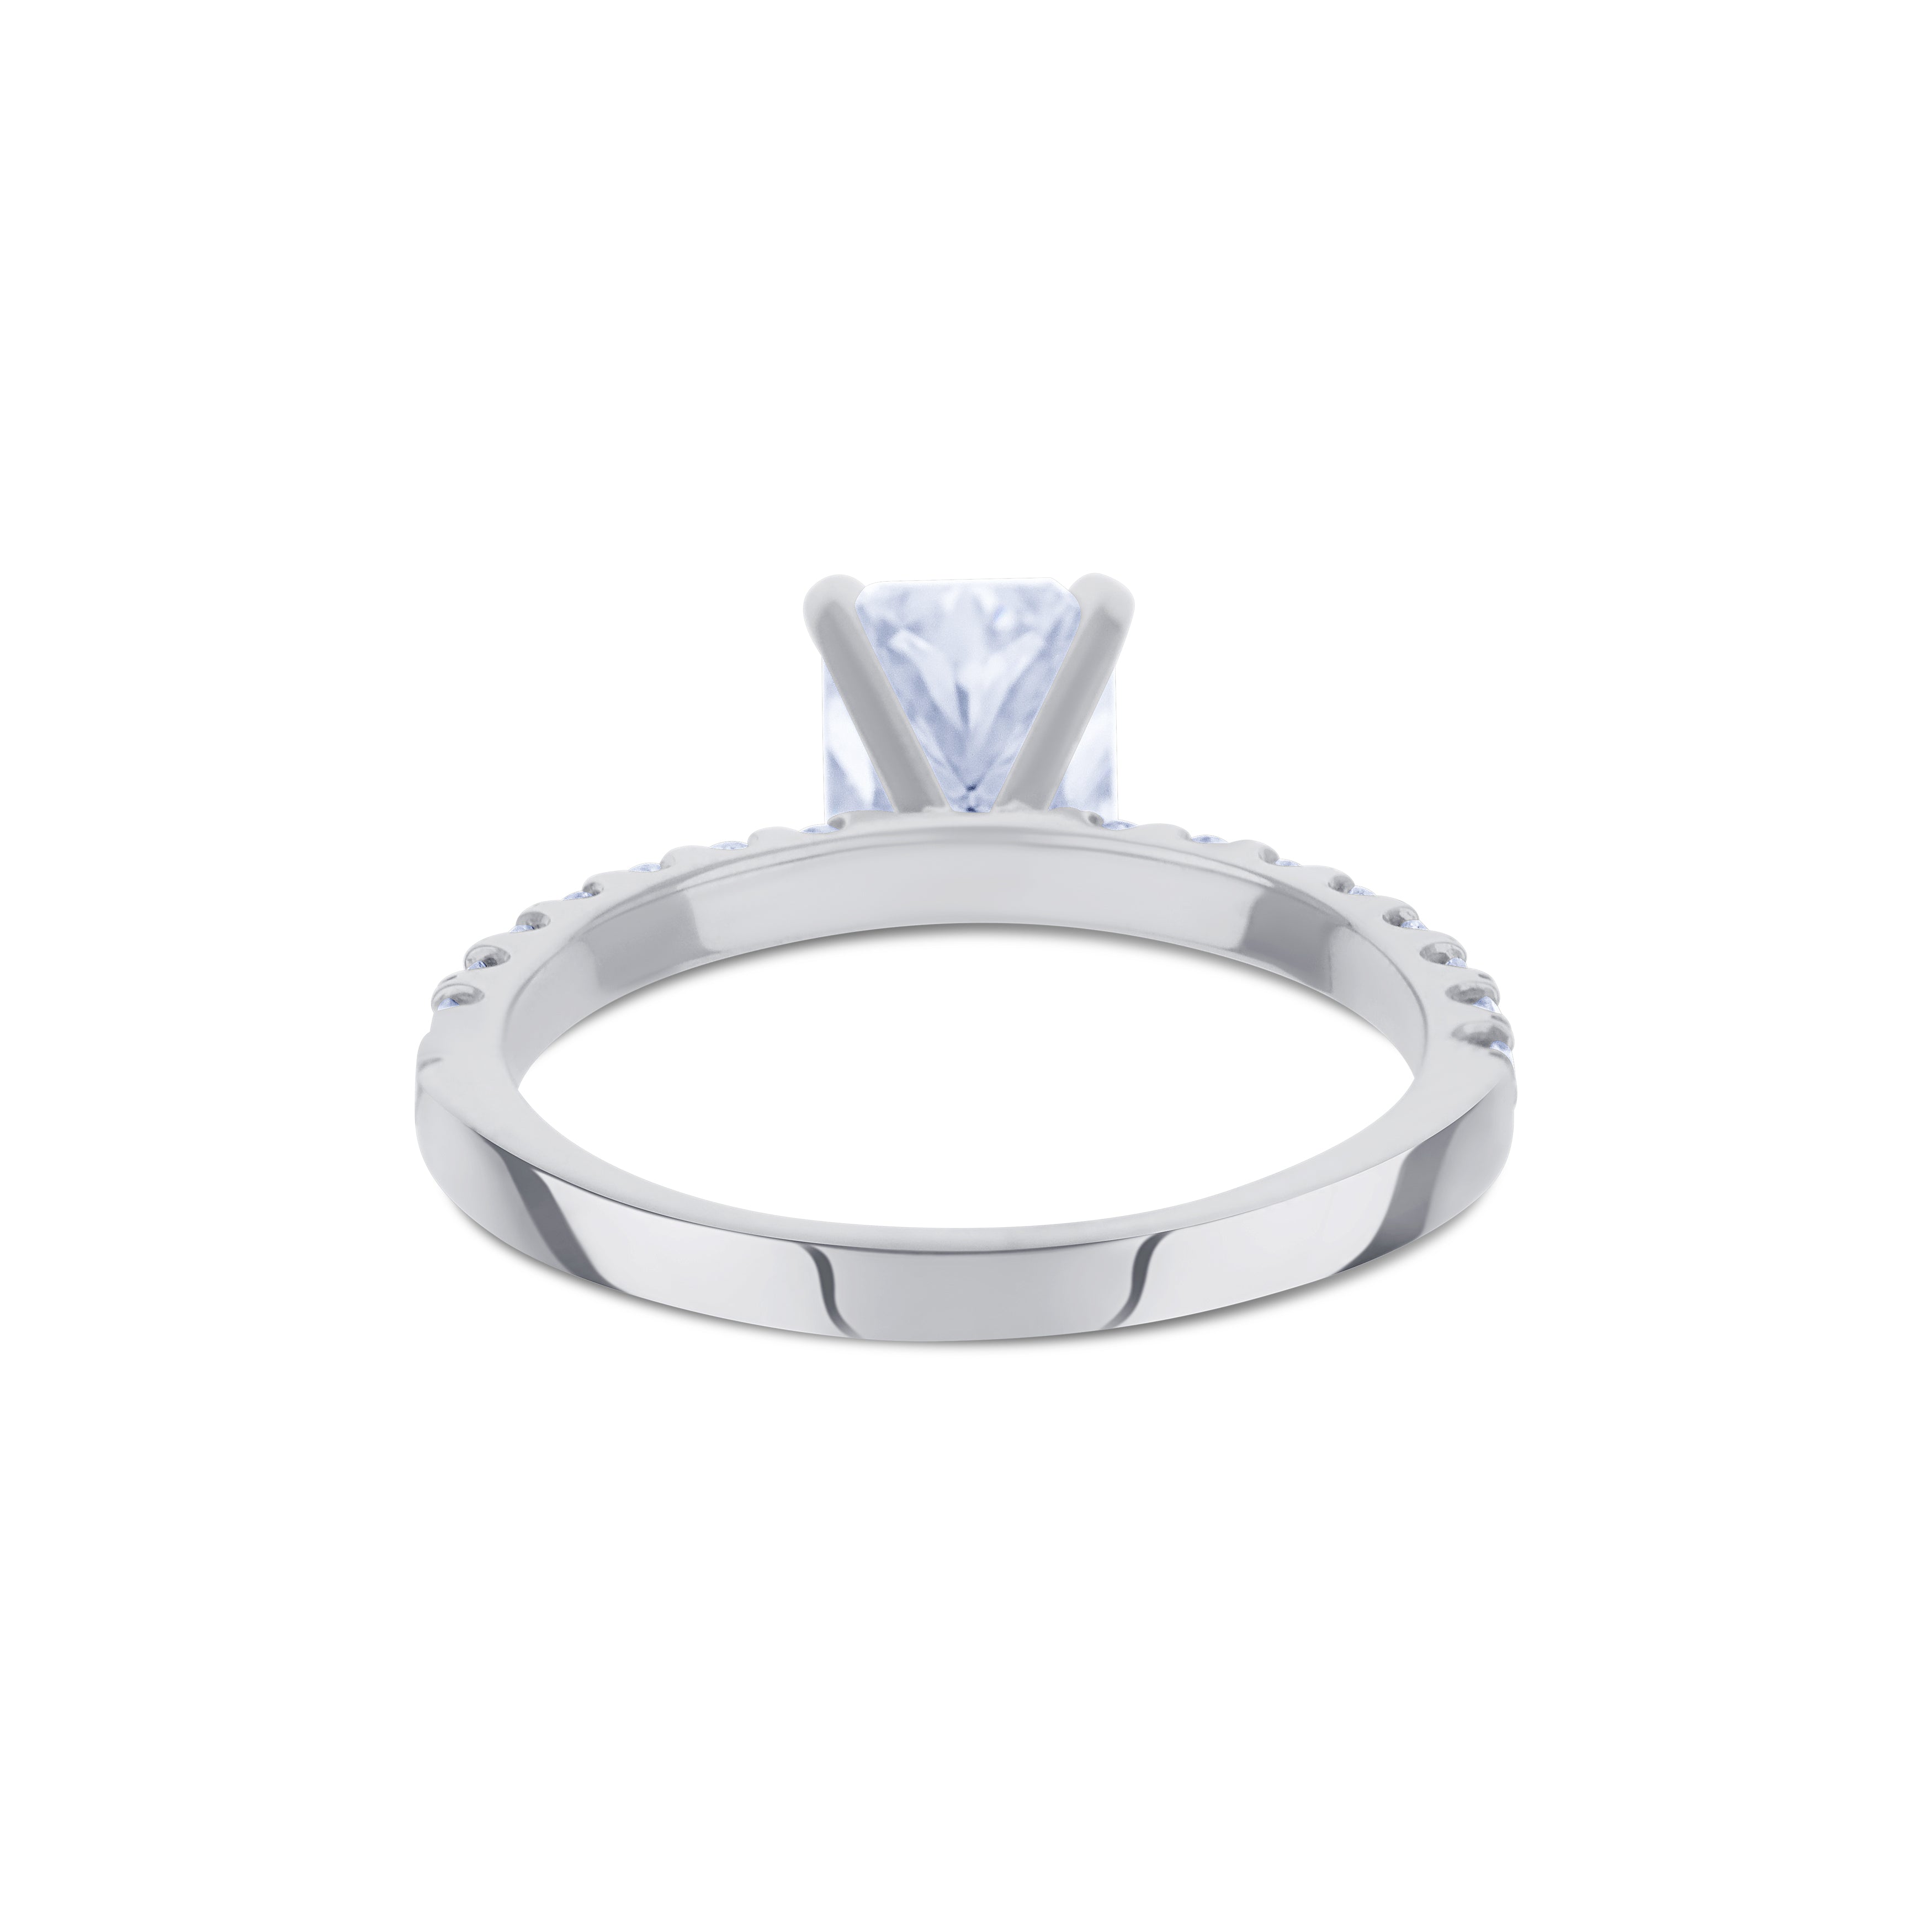 14K White Gold Ring With A 1.60 Carat Cut-Cornered Rectangular Diamond